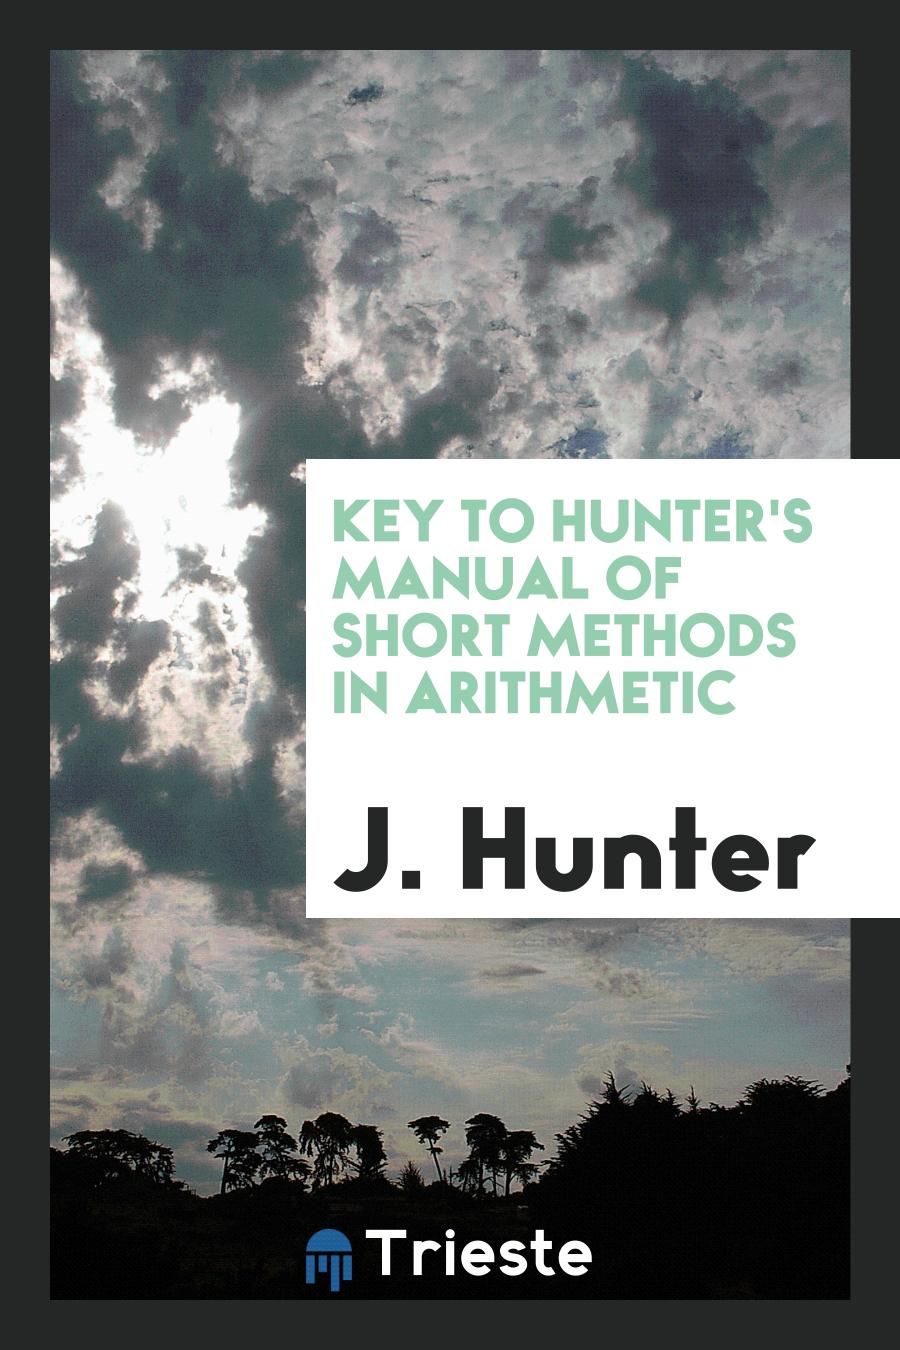 Key to hunter's manual of short methods in arithmetic